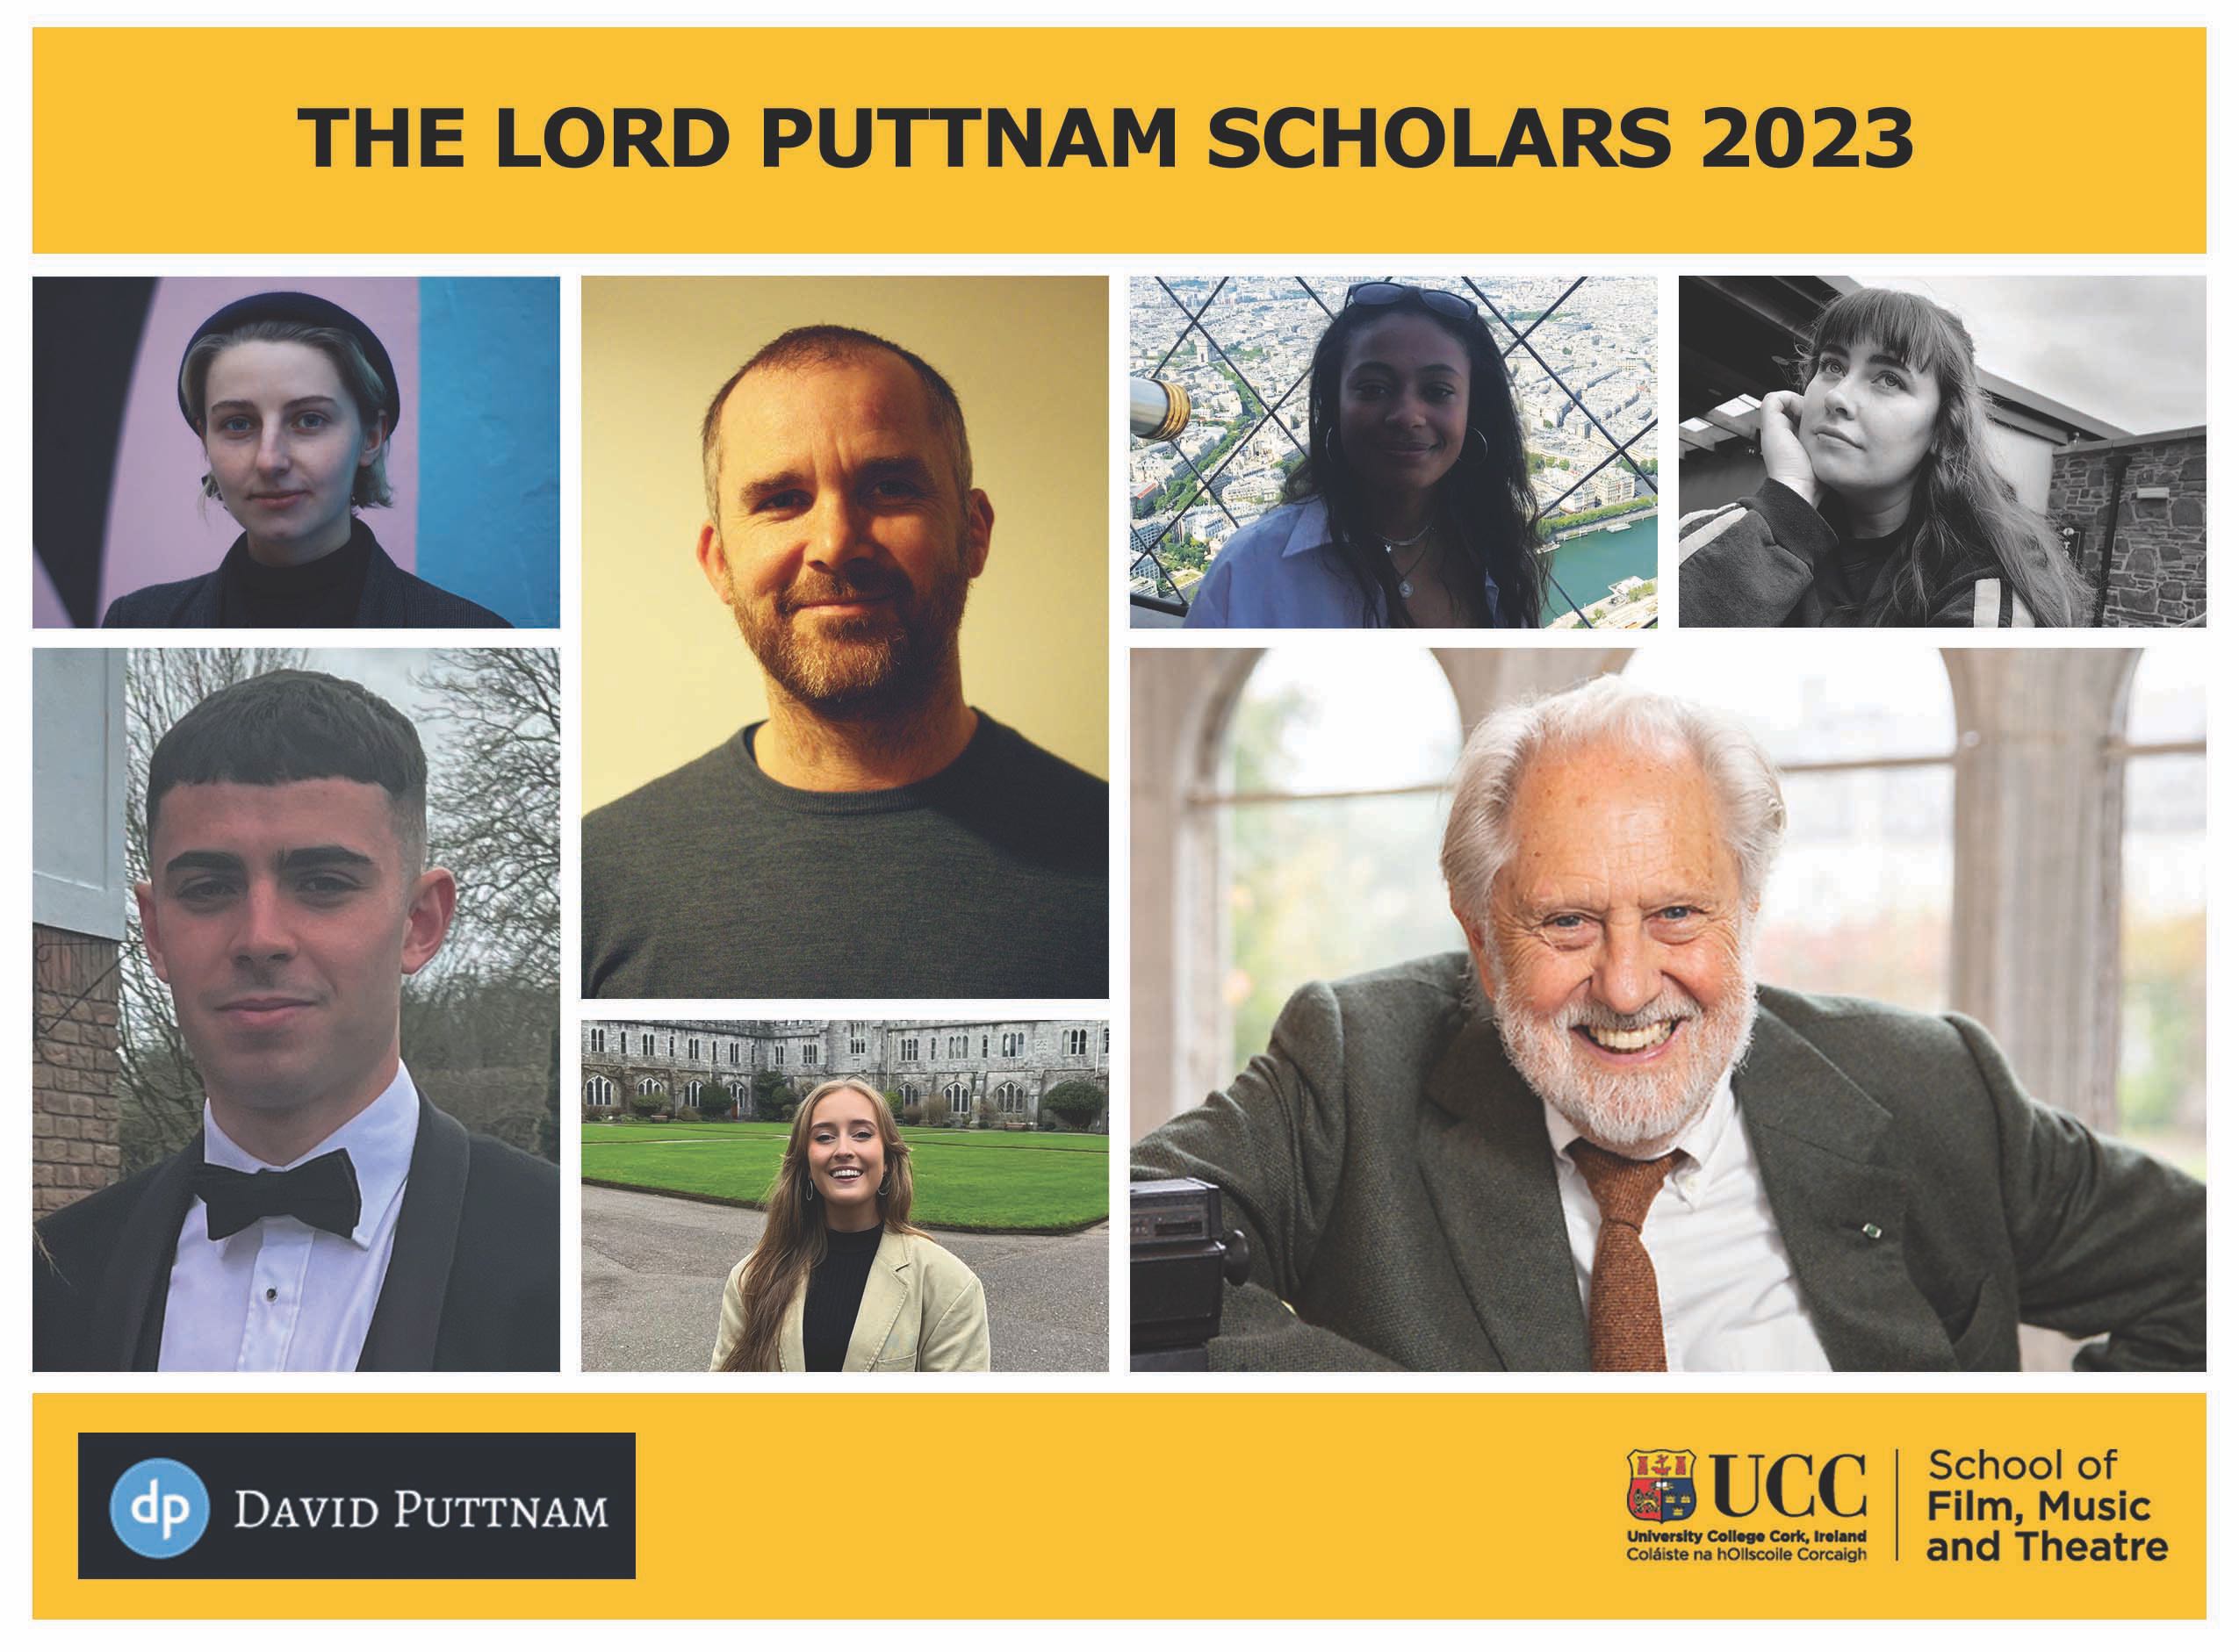 The Lord Puttnam Scholars 2023